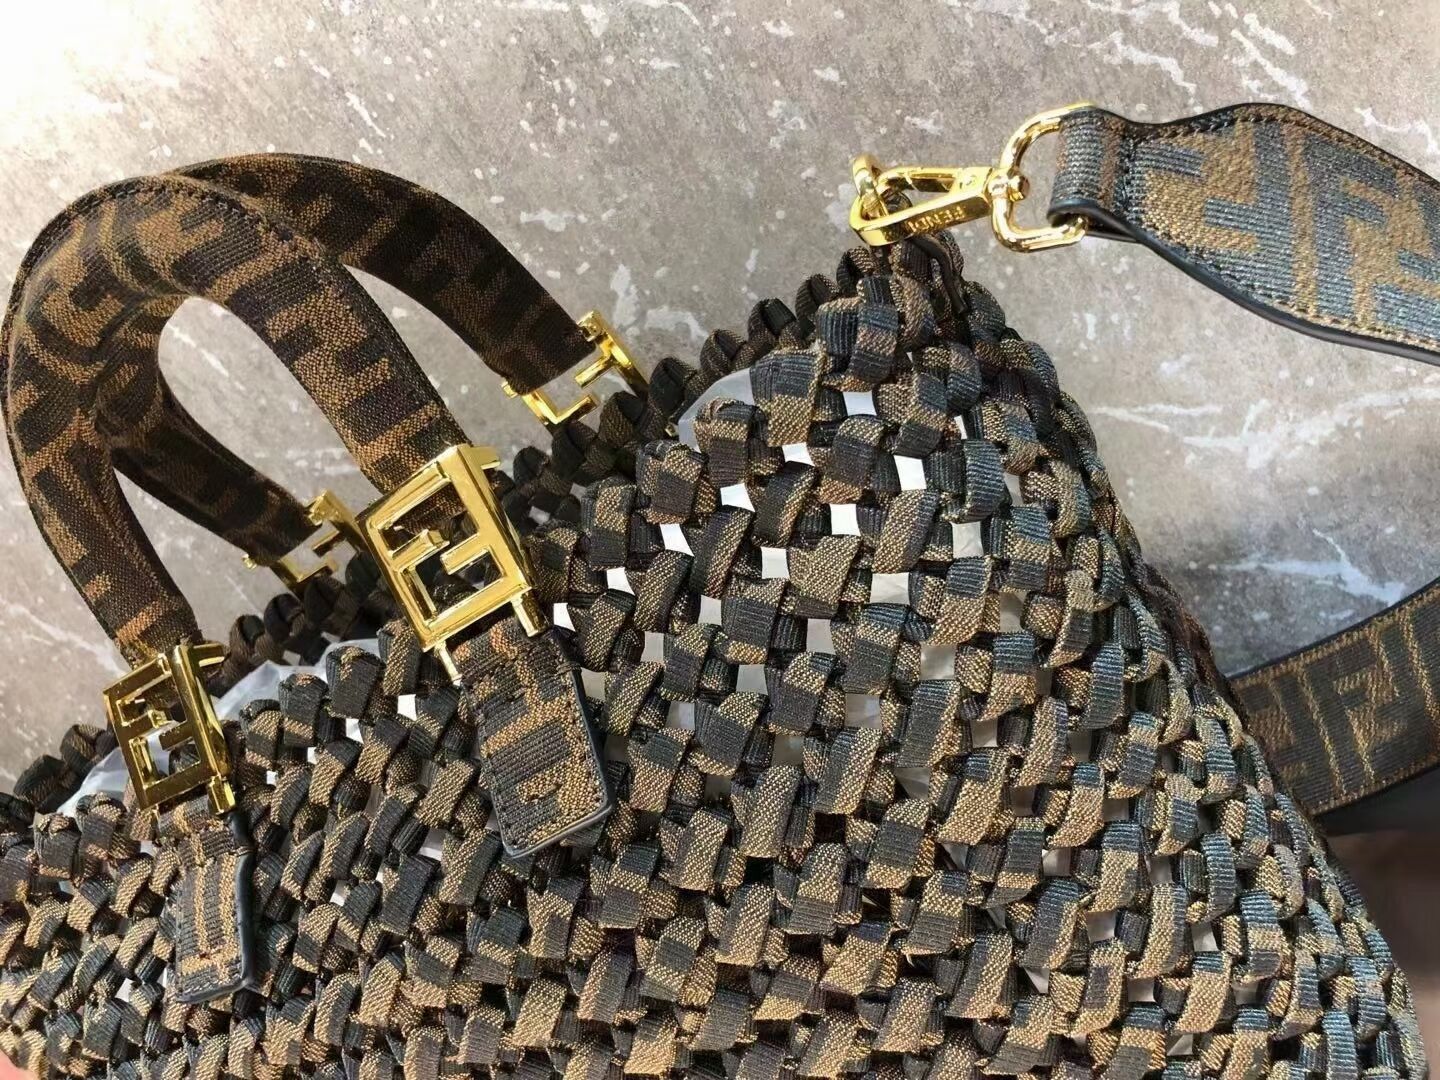 Fendi Weave Bag F6501 brown